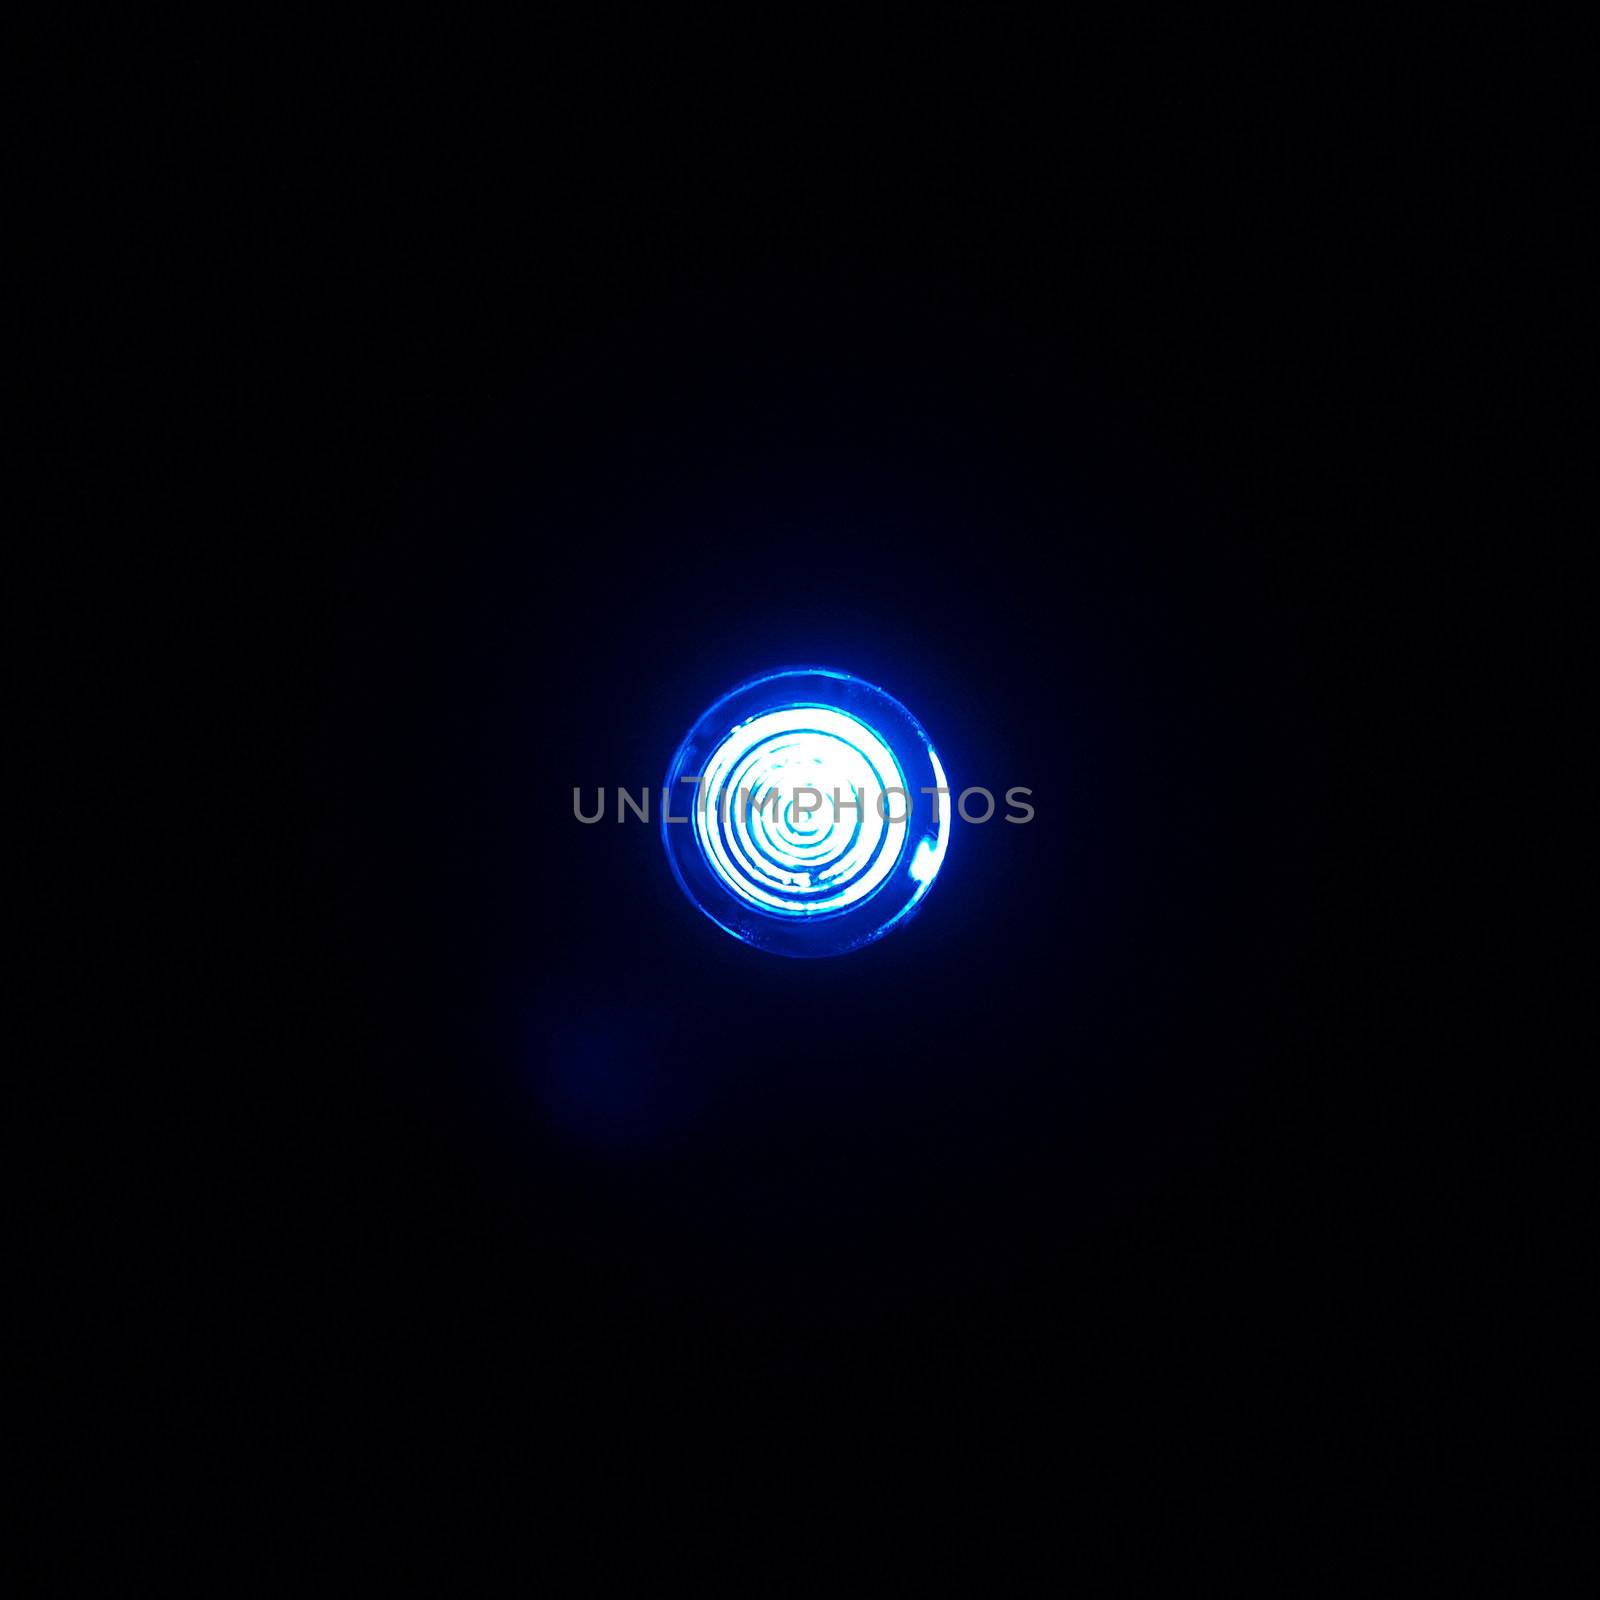 Blue light blur over dark black background